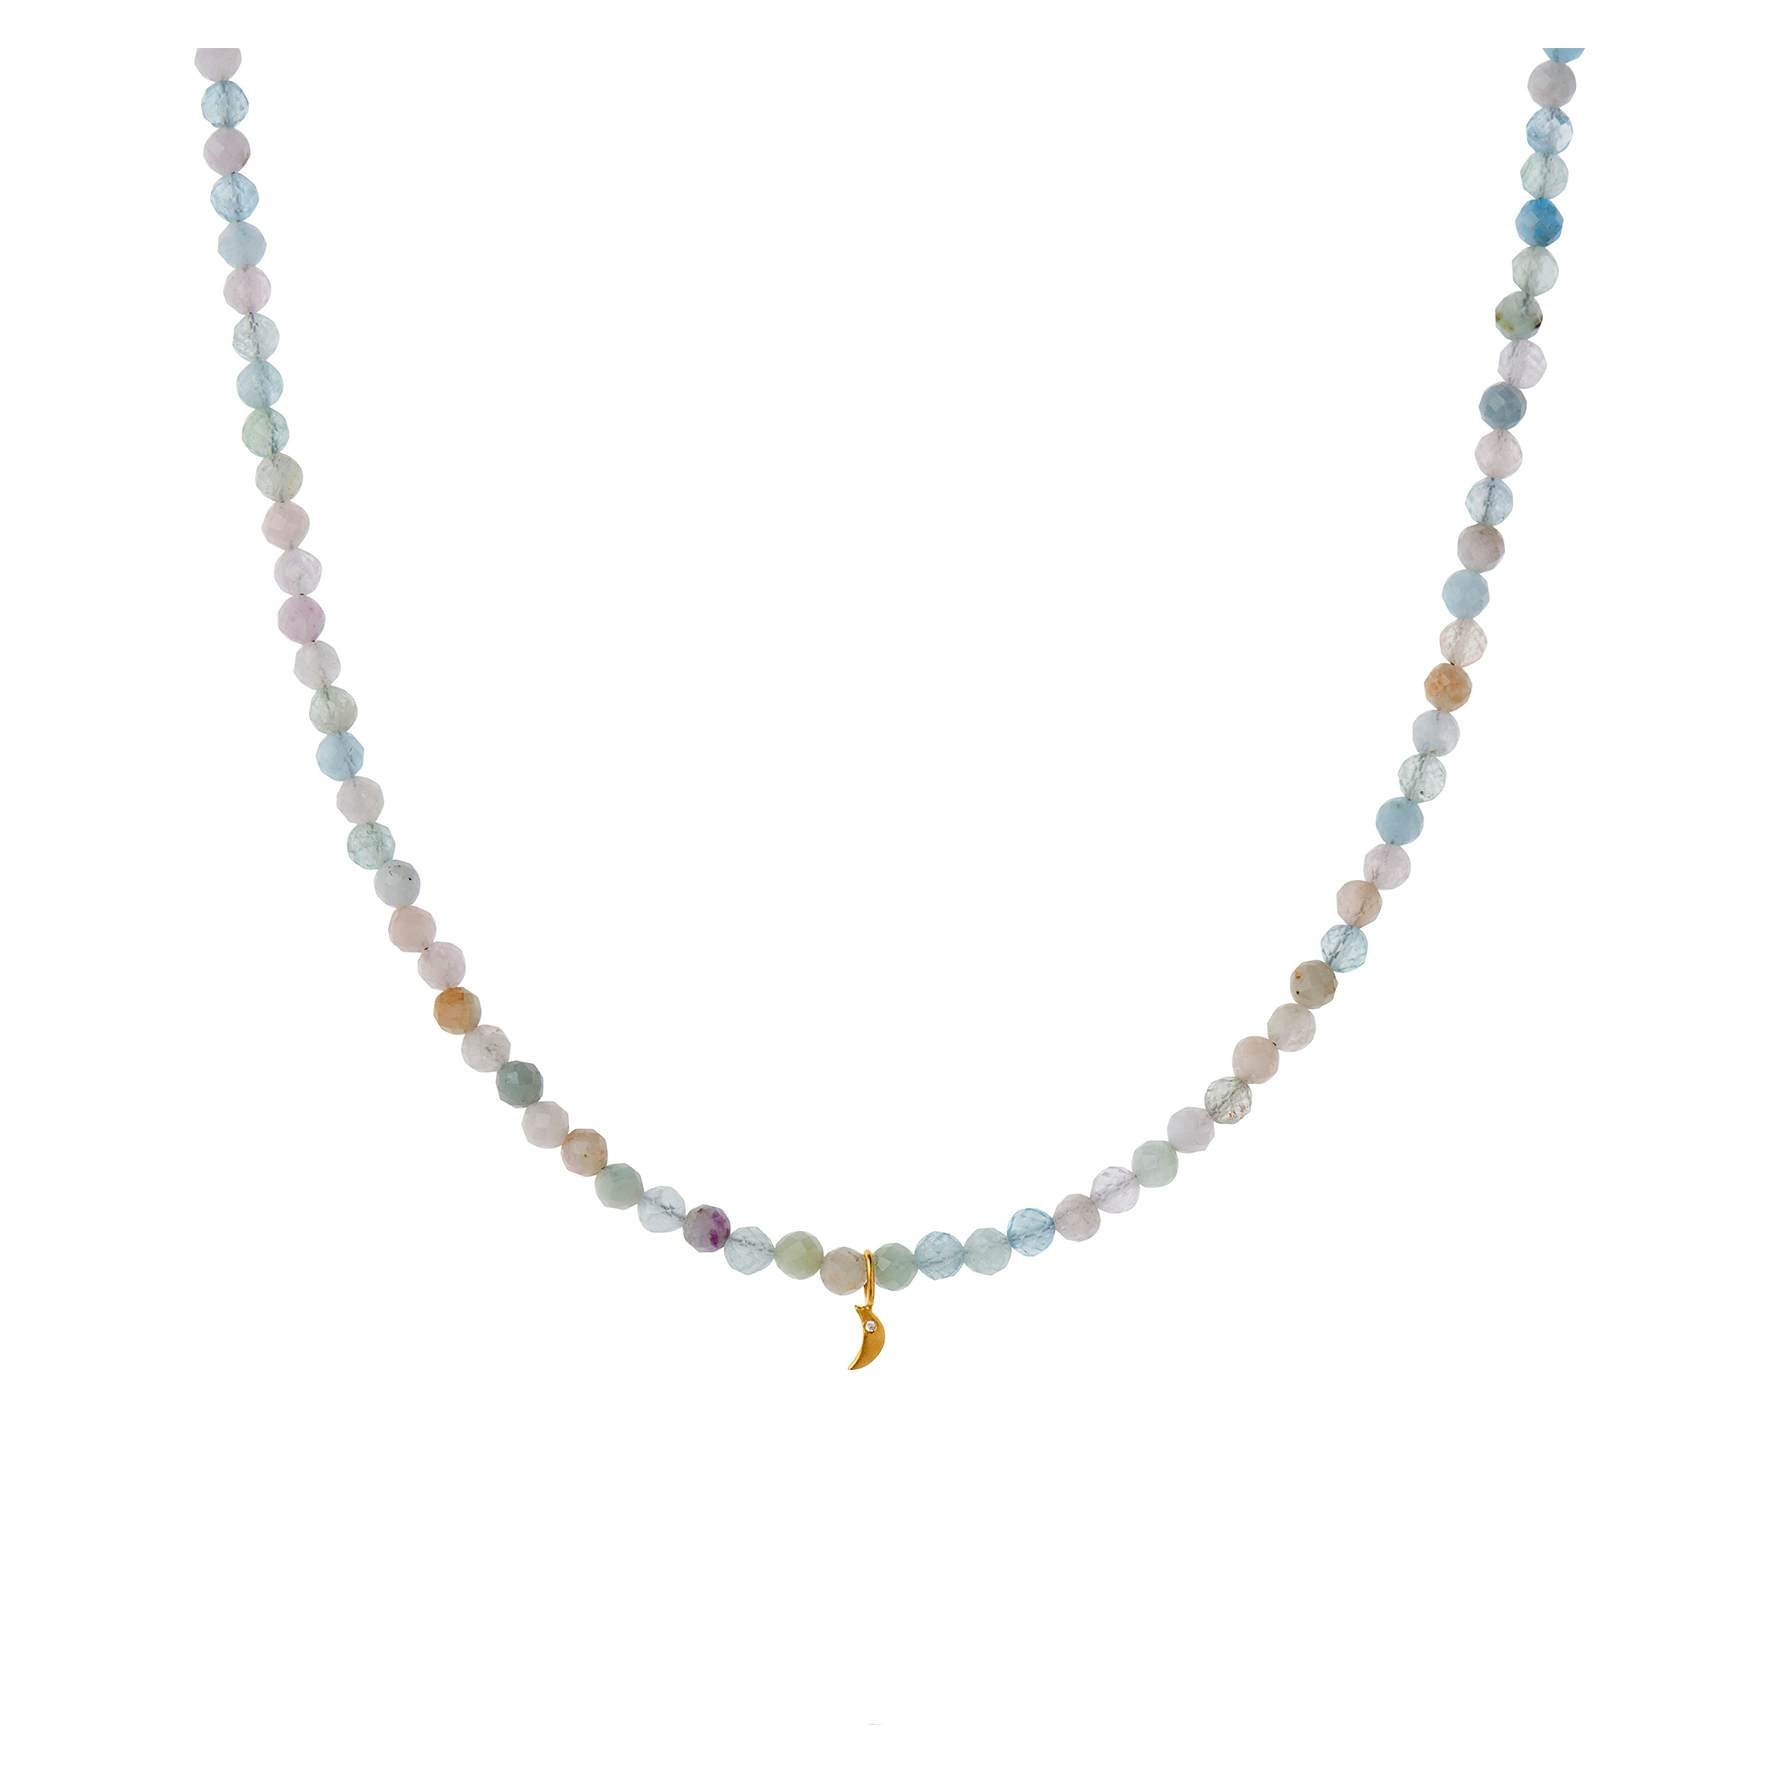 Soft Pastella With Tres Patit Moon Necklace från STINE A Jewelry i Förgyllt-Silver Sterling 925